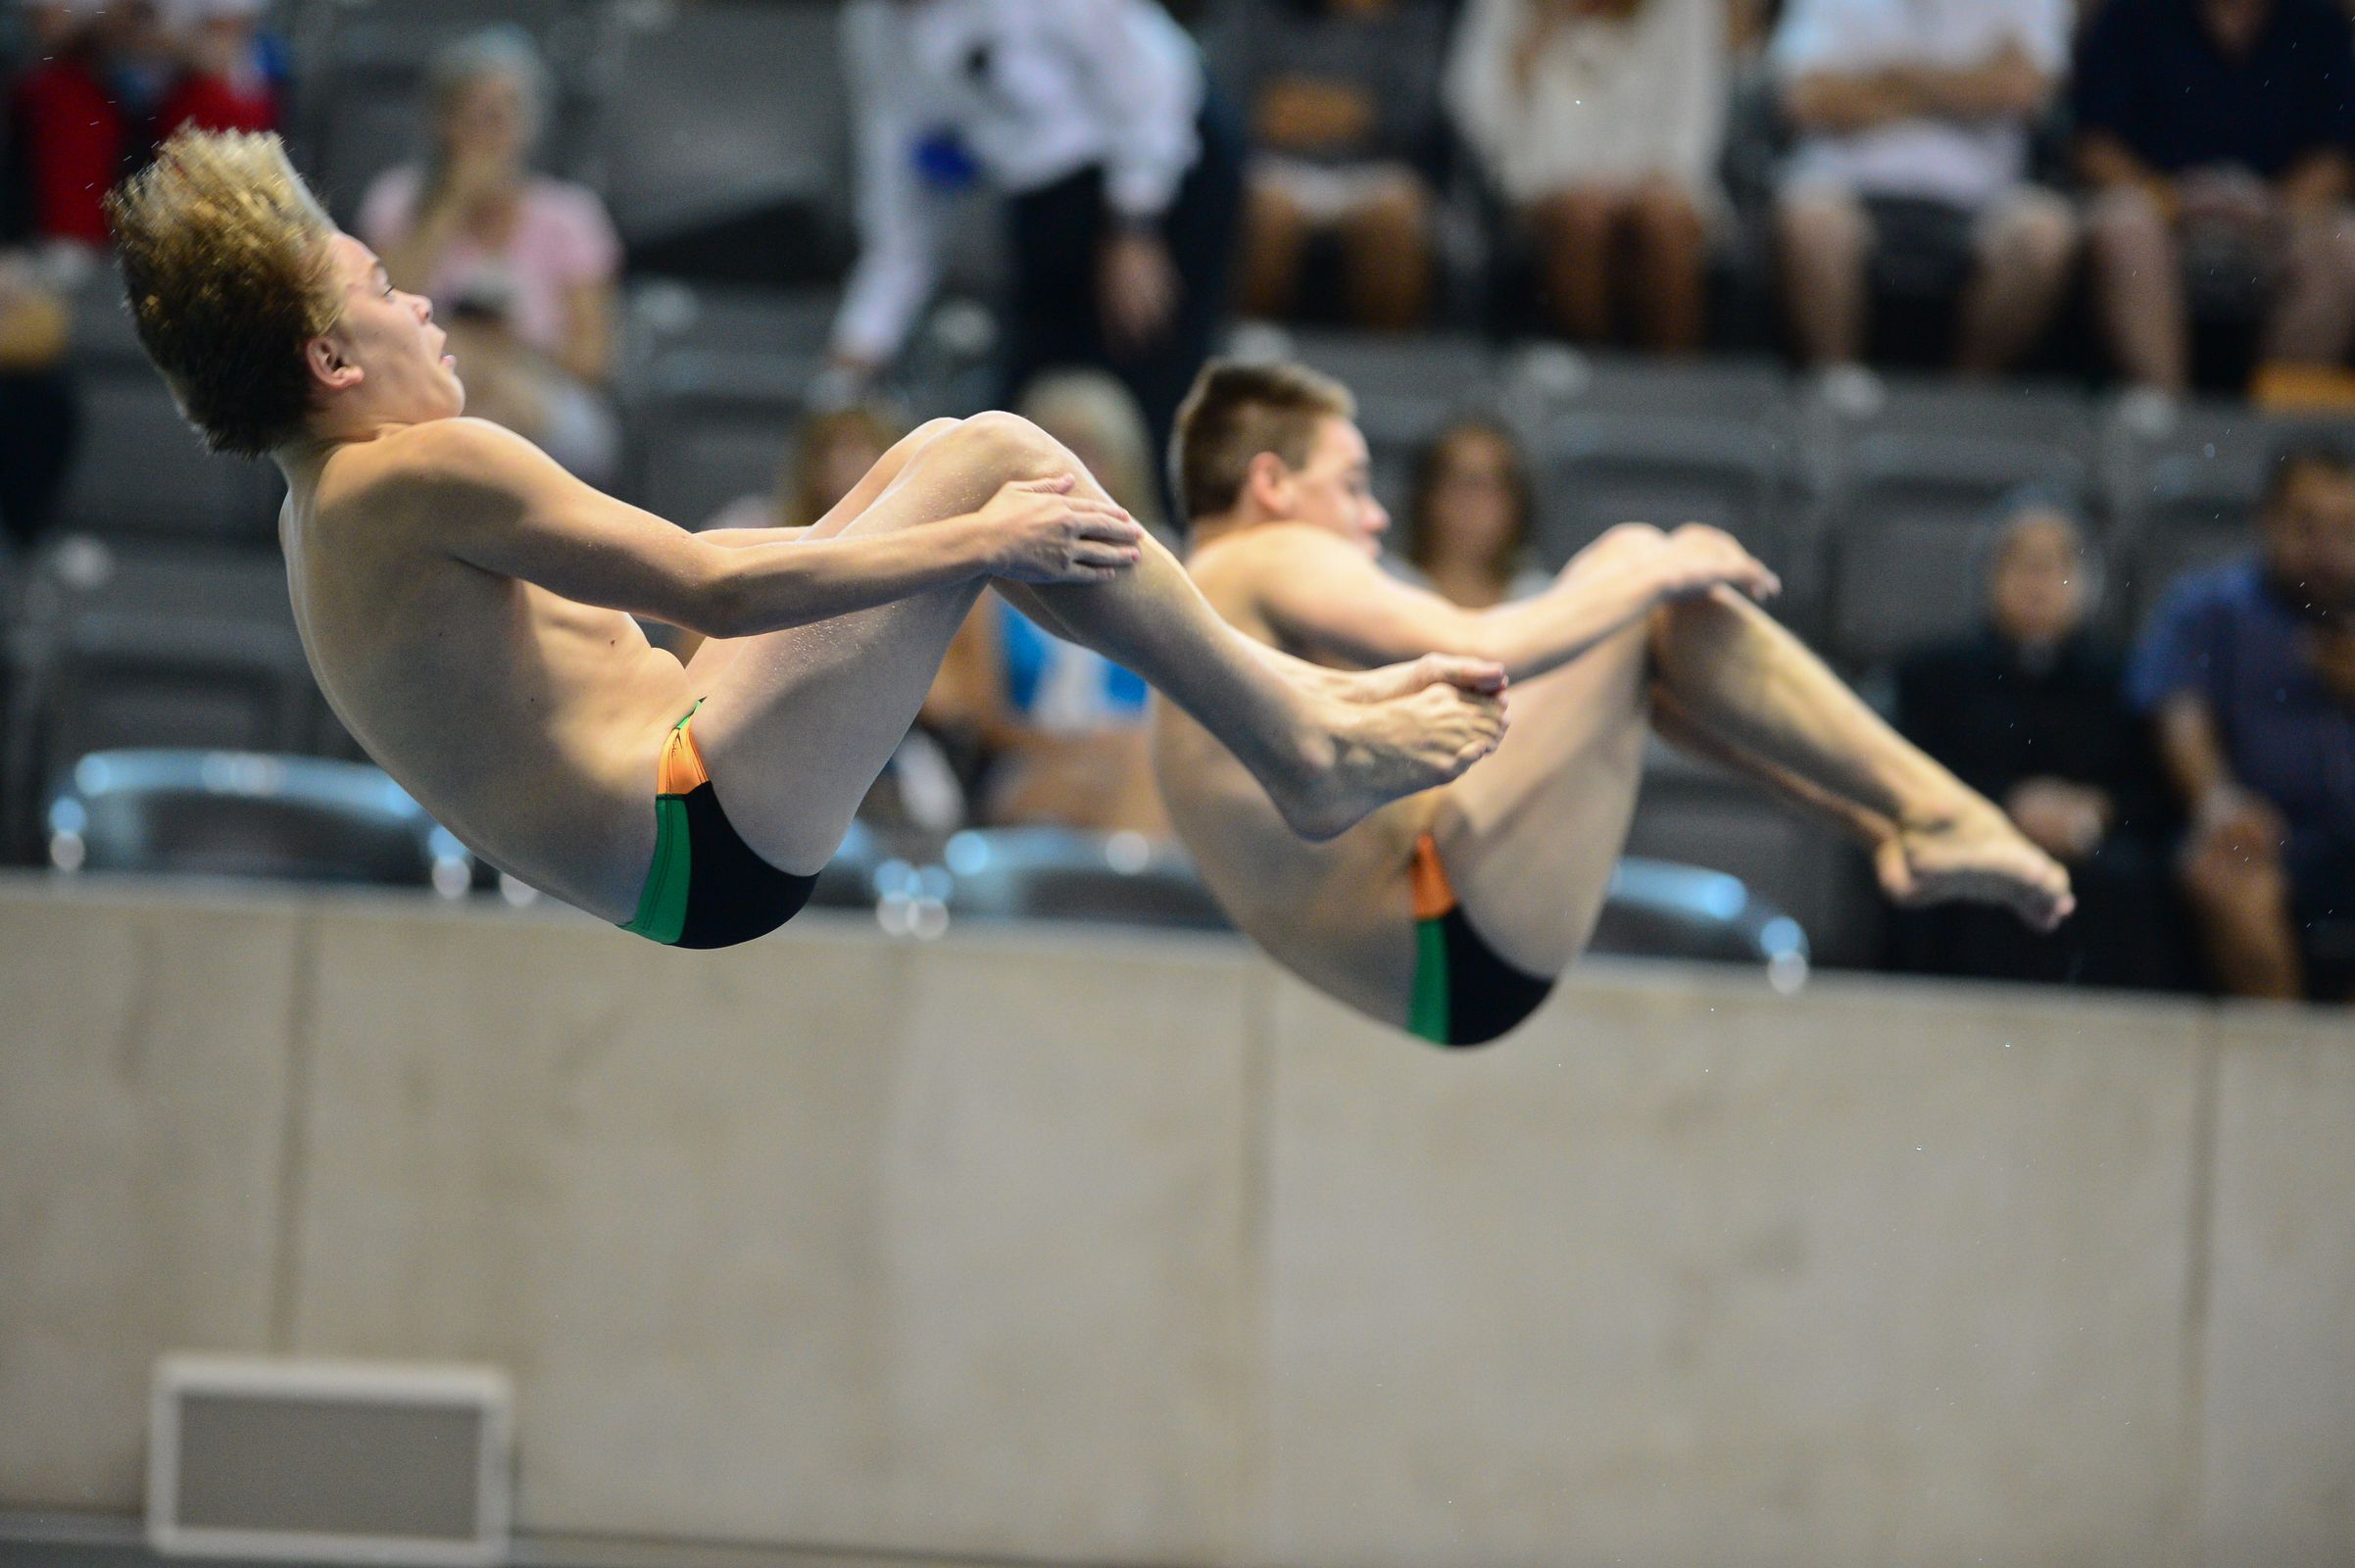 Photo Gallery Usa Diving Junior Nationals Swimming World News